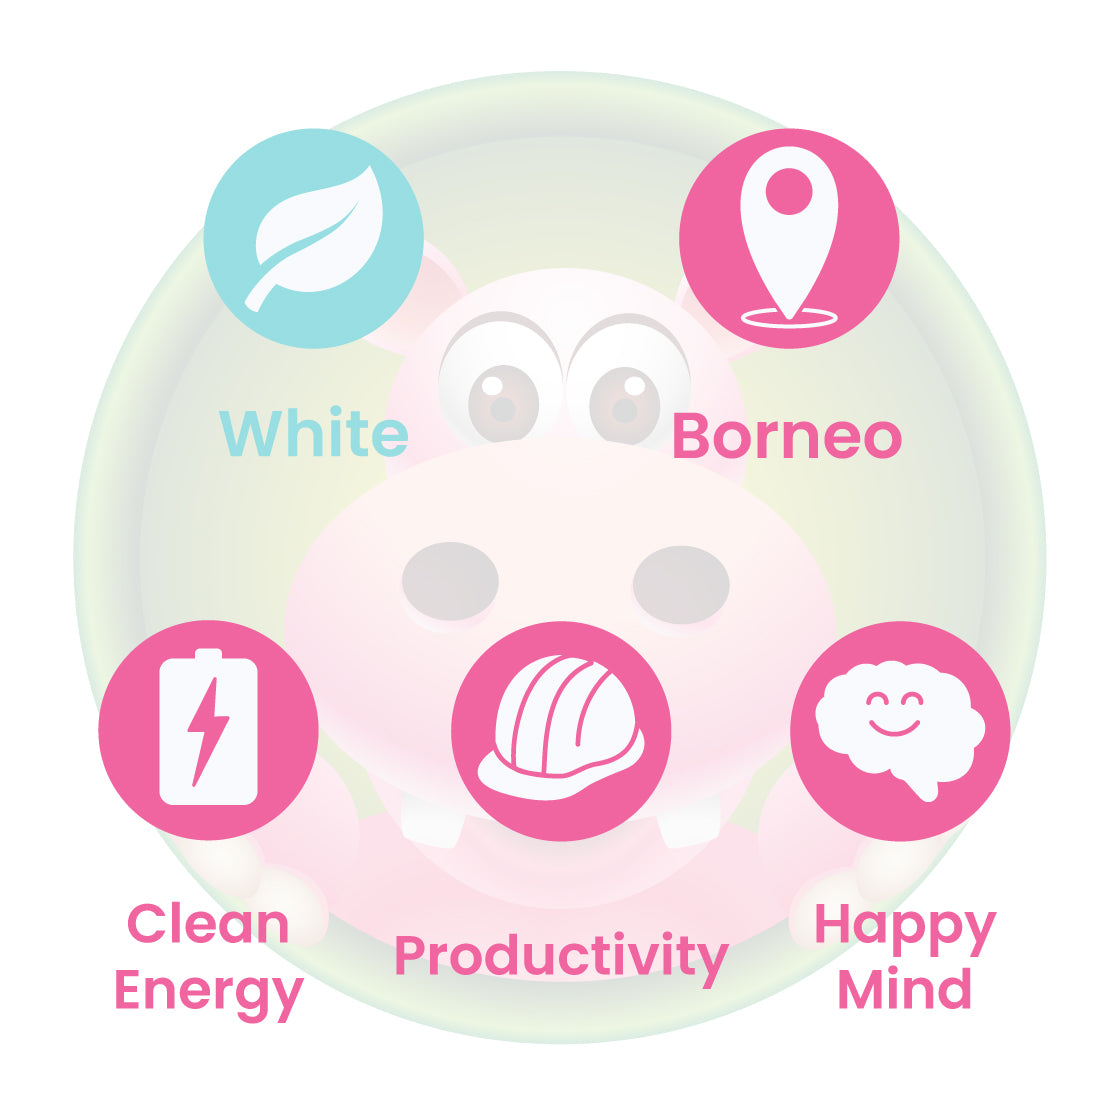 Infographic Details for Happy Hippo White Borneo Kratom Powder. Leaf color: White Vein. Kratom Strain Origin: Borneo. Kratom Effects resonate with Happy Mind, Productivity, and Clean Energy.